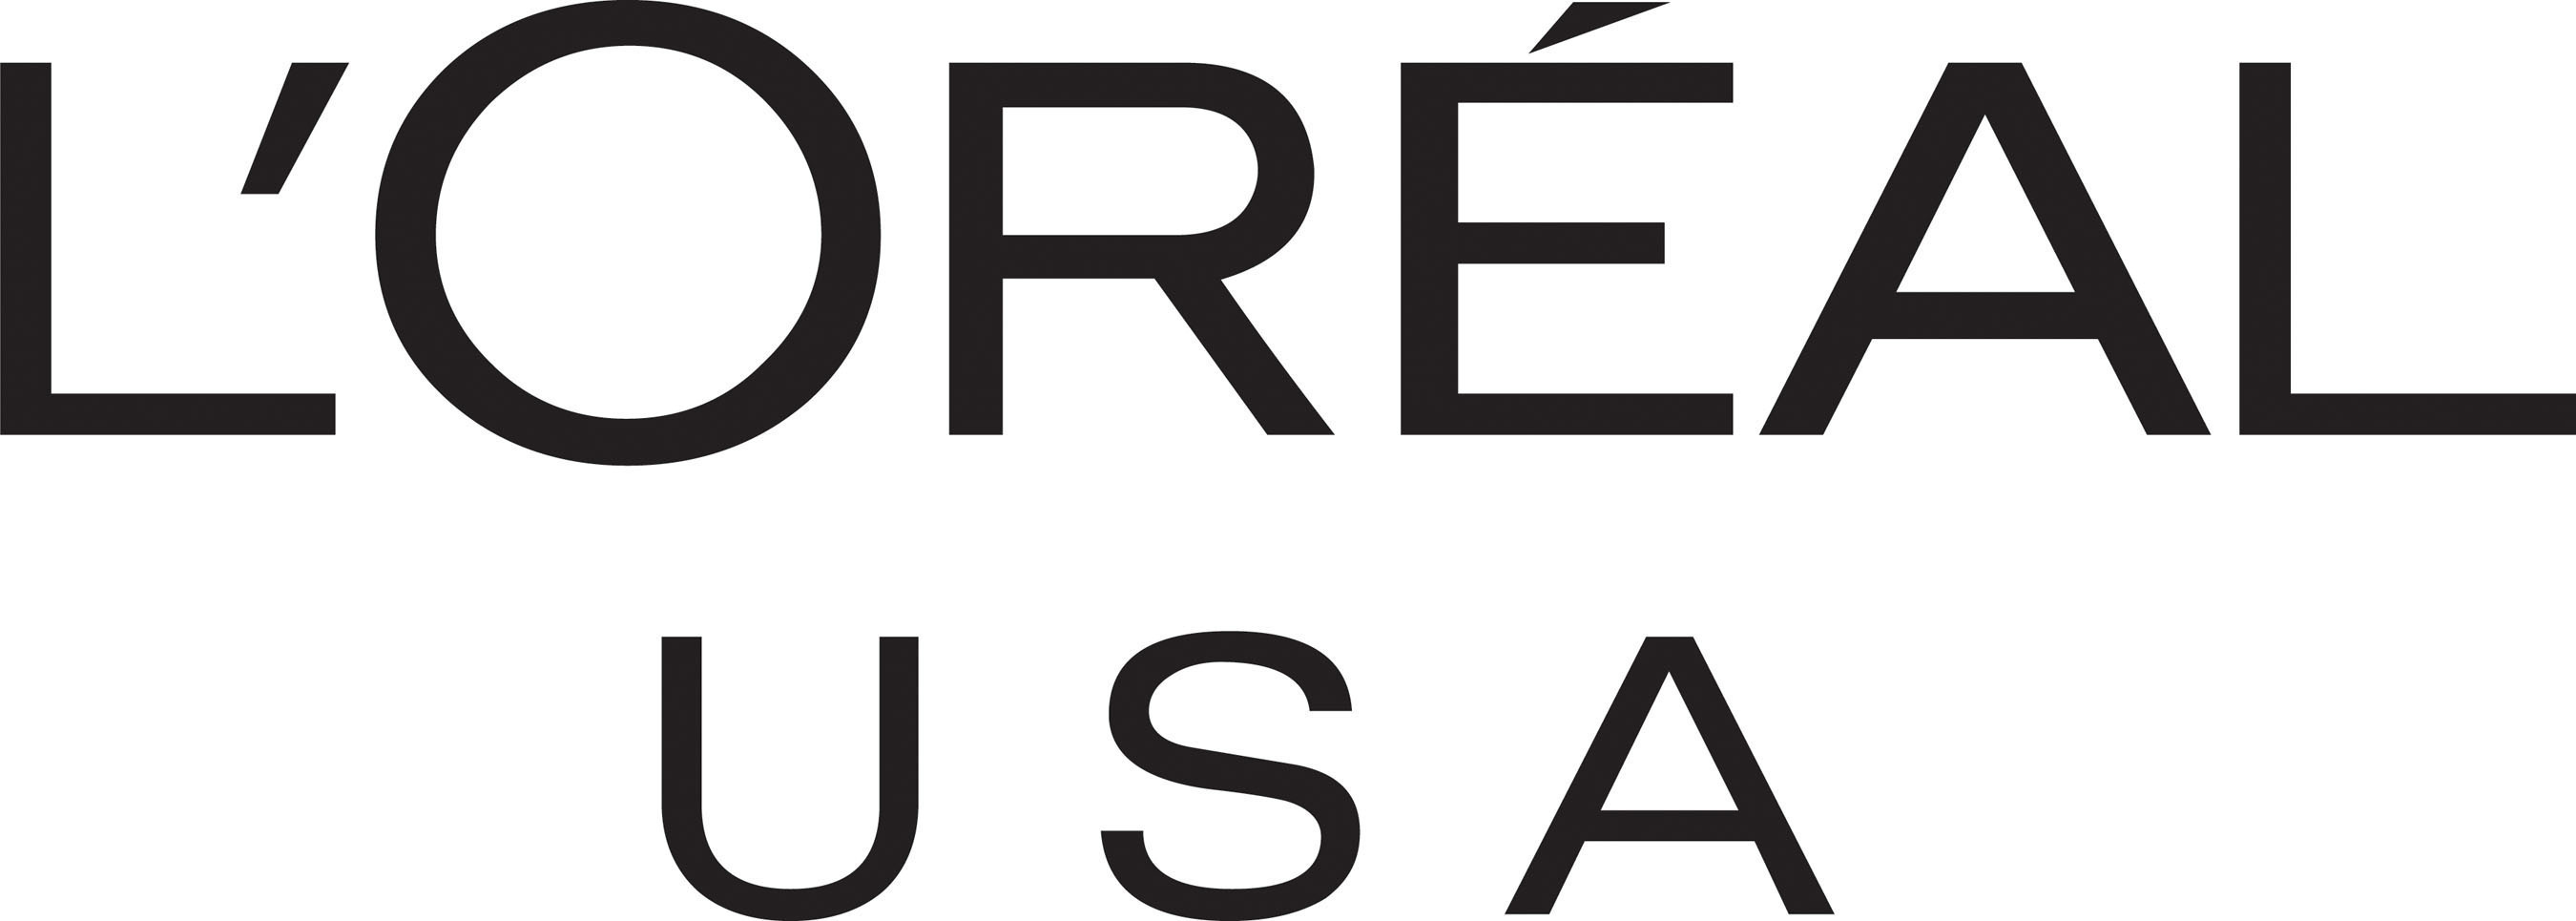 L'Oreal USA Logo. (PRNewsFoto/L'Oreal USA) (PRNewsFoto/)